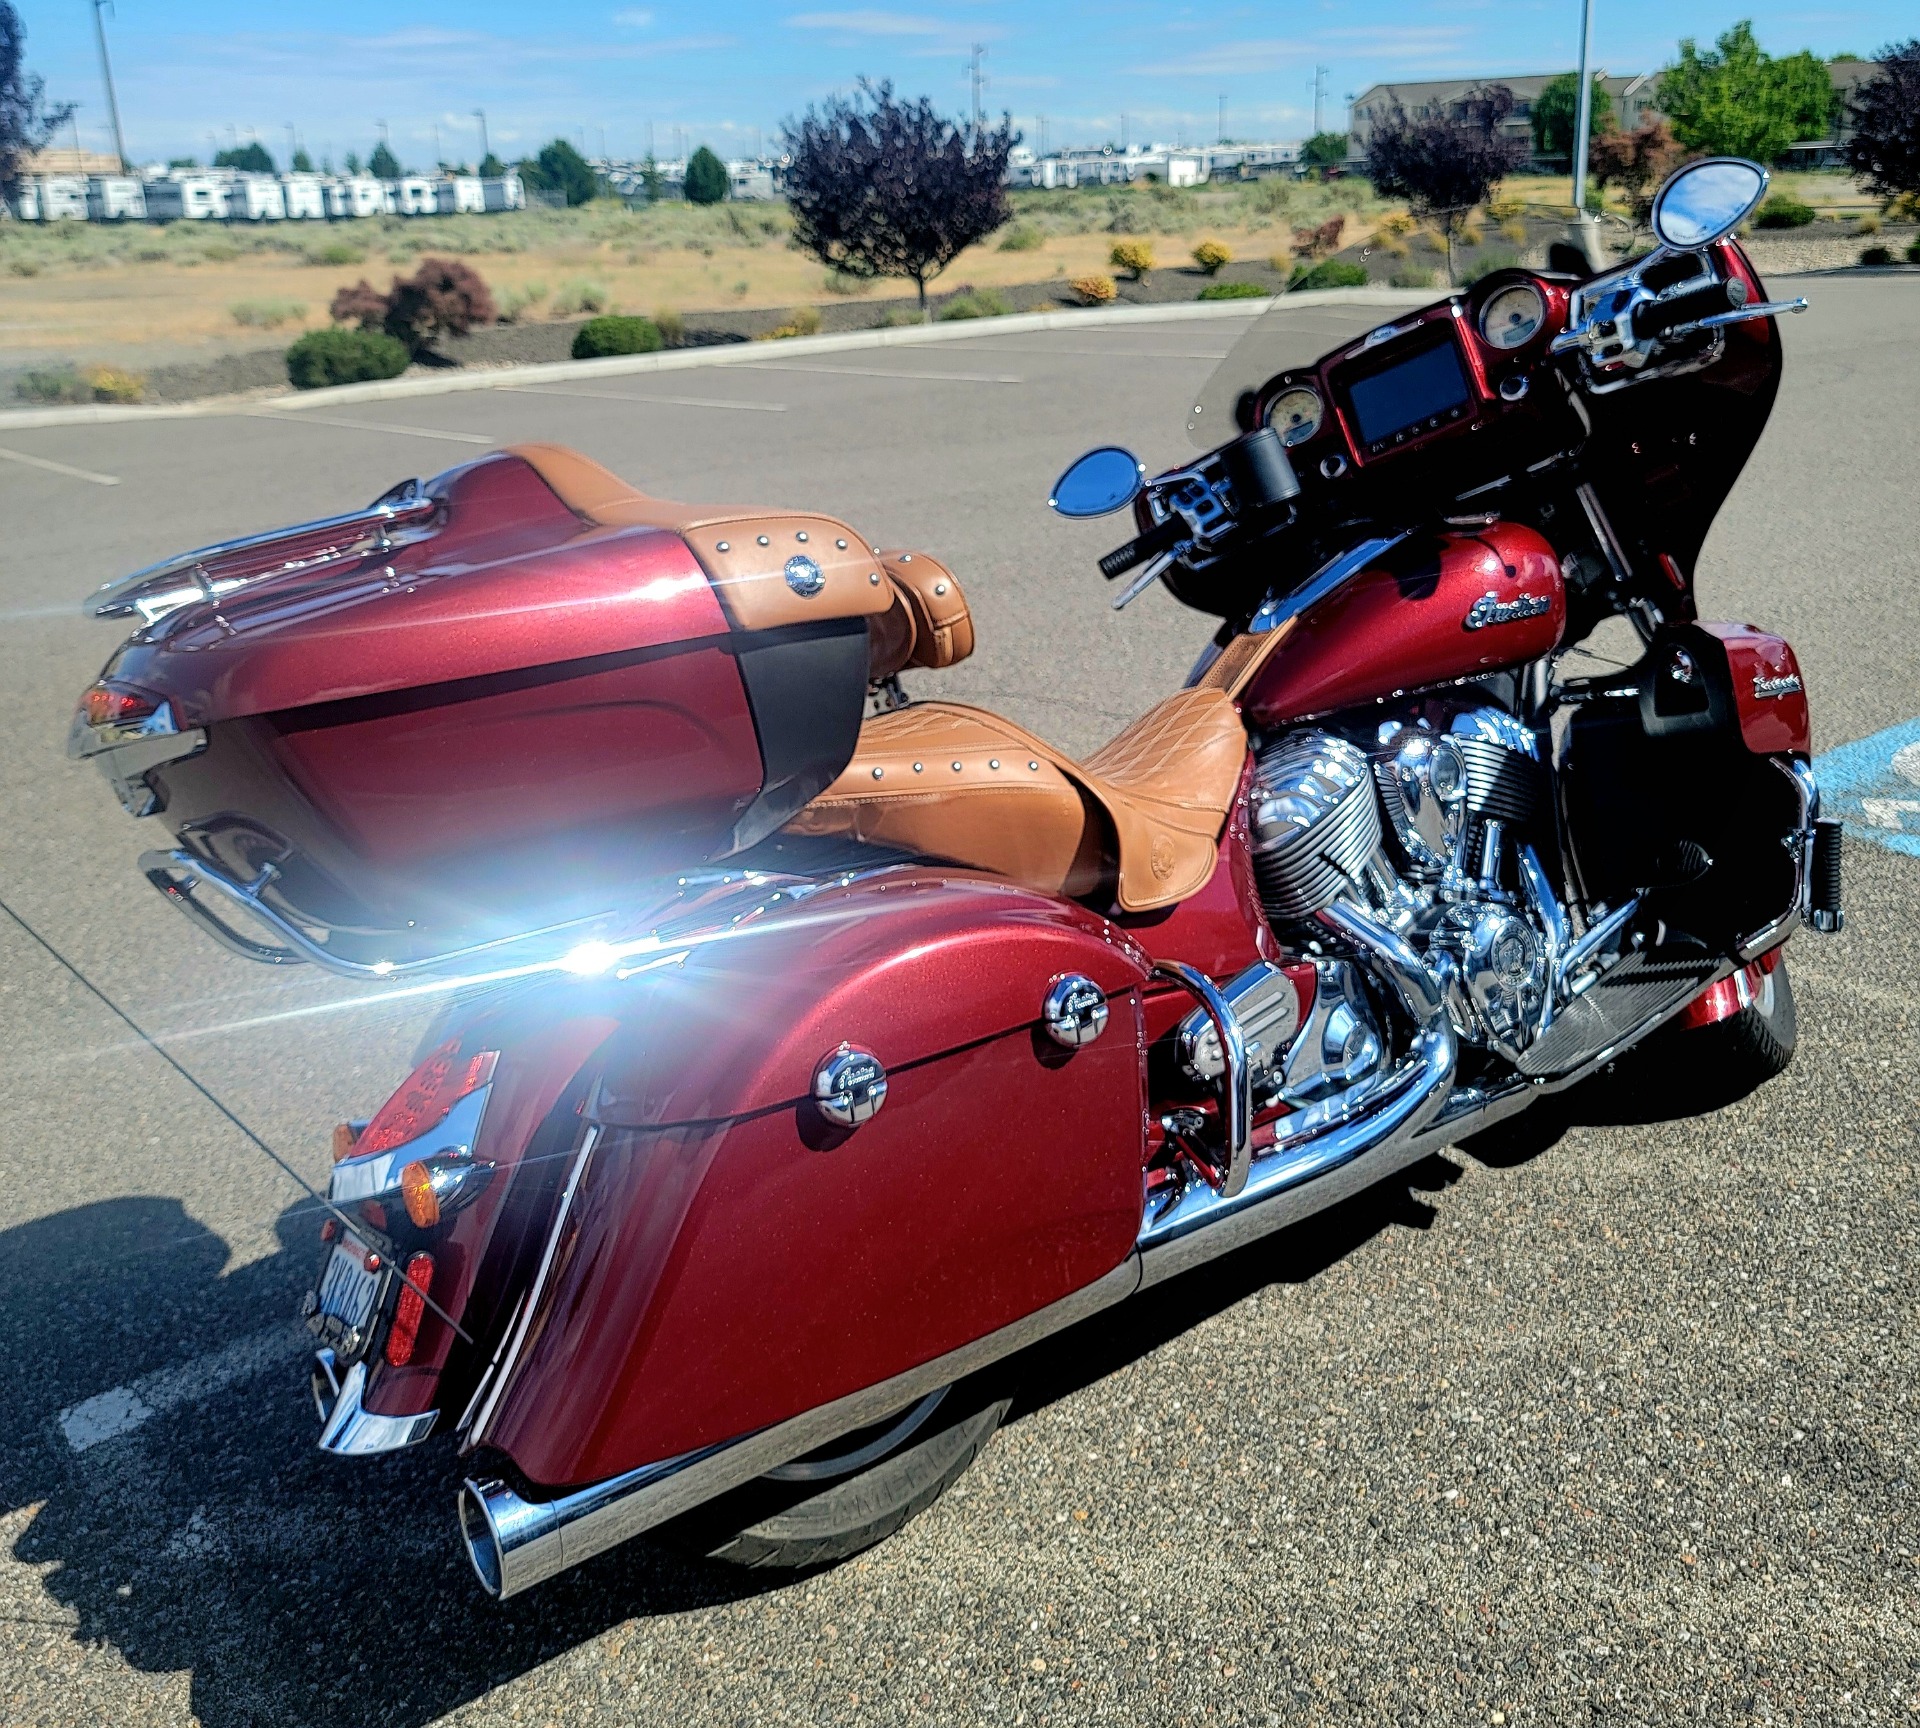 2019 Indian Motorcycle Roadmaster® ABS in Pasco, Washington - Photo 8